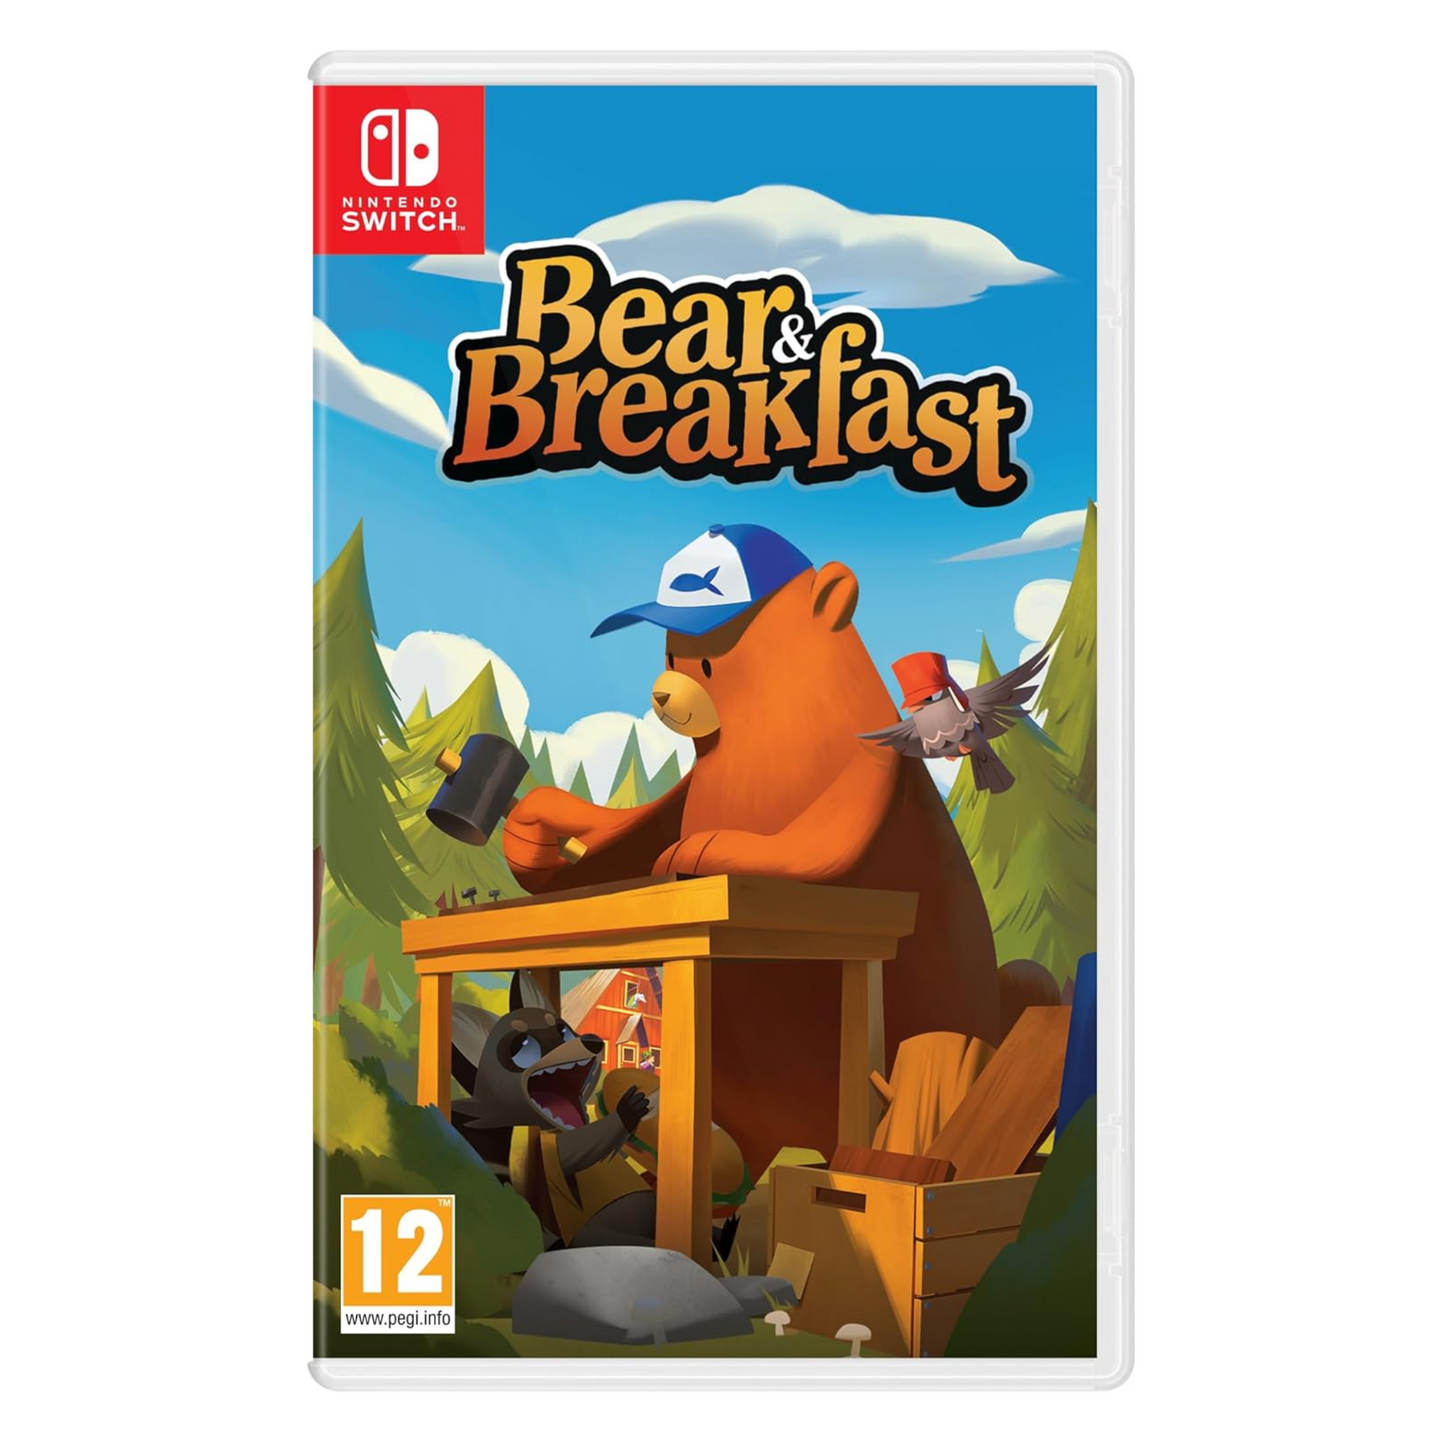 Bear & Breakfast Video Game for Nintendo Switch